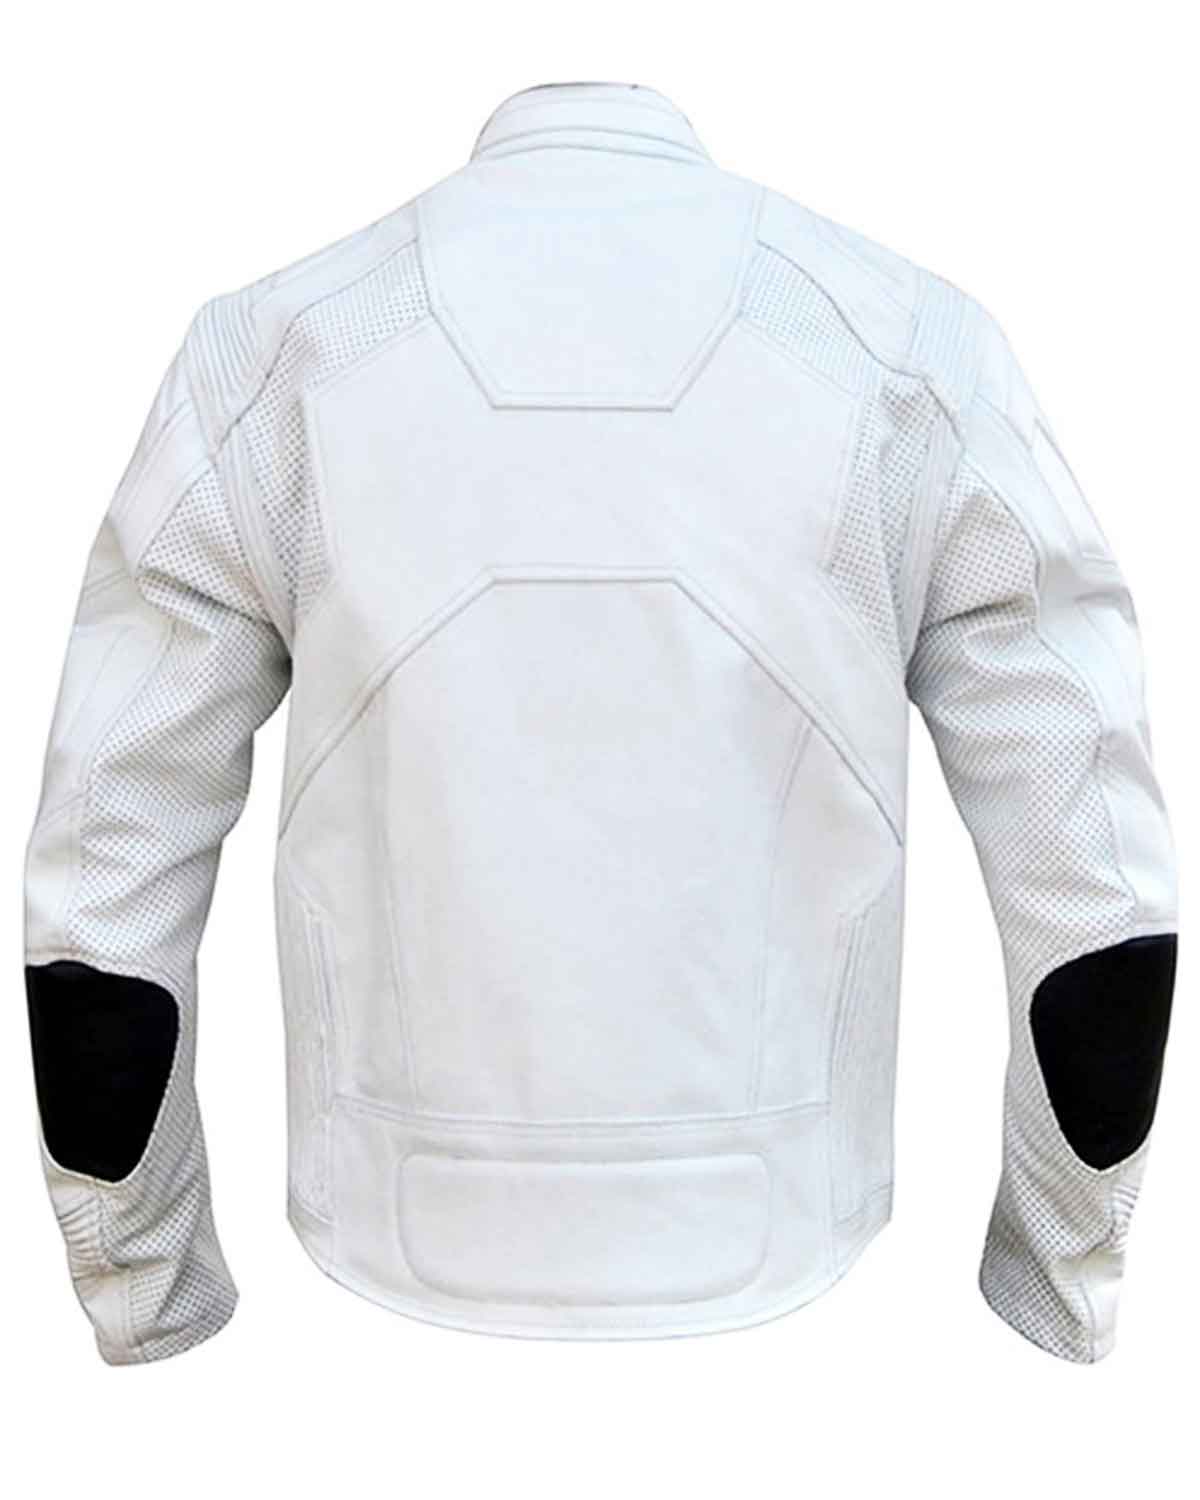 Elite Tom Cruise Oblivion White Motorcycle Jacket